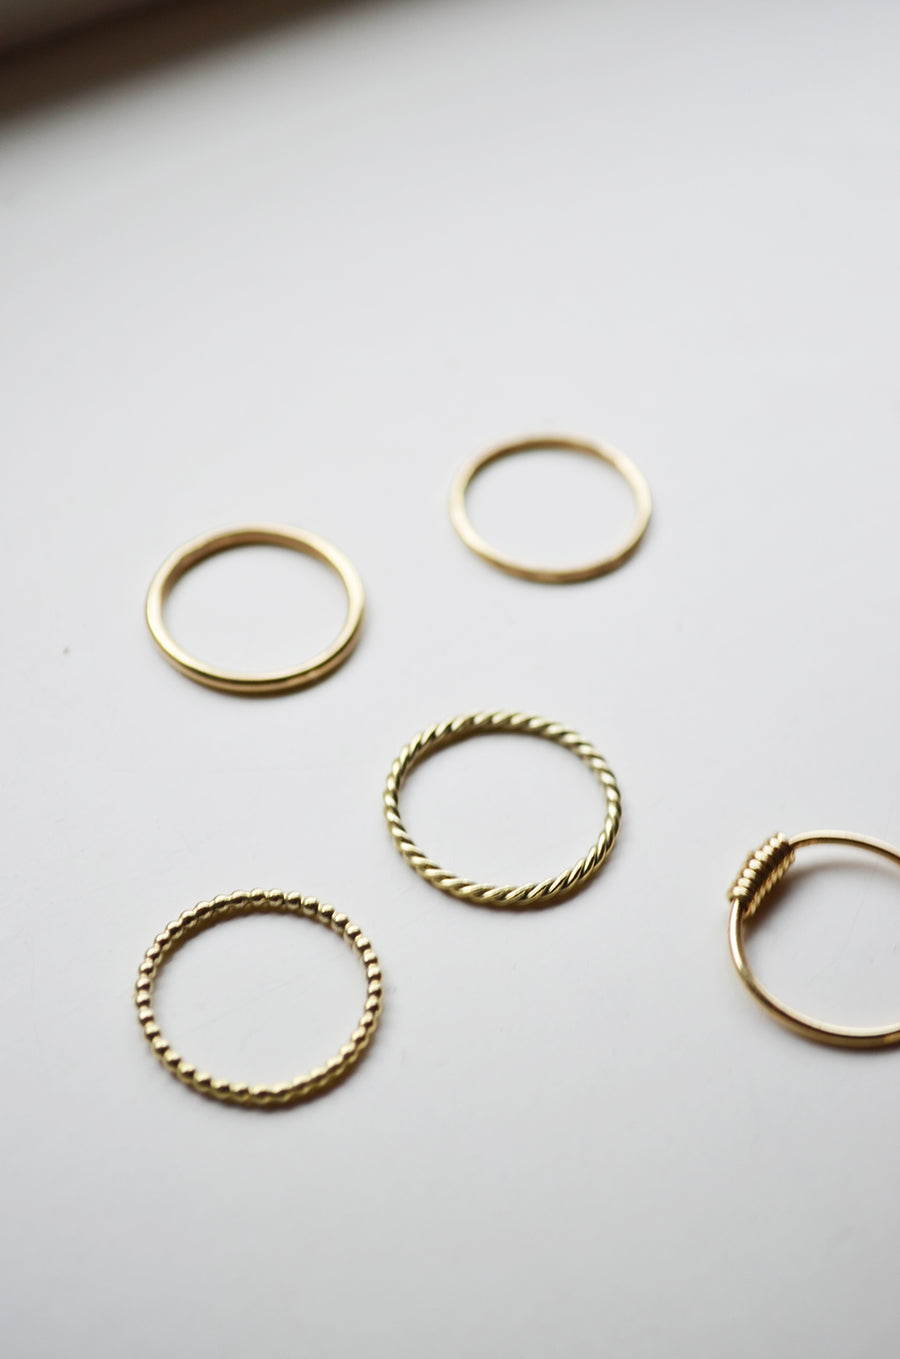 Plain Ring Thin - Gold 14k